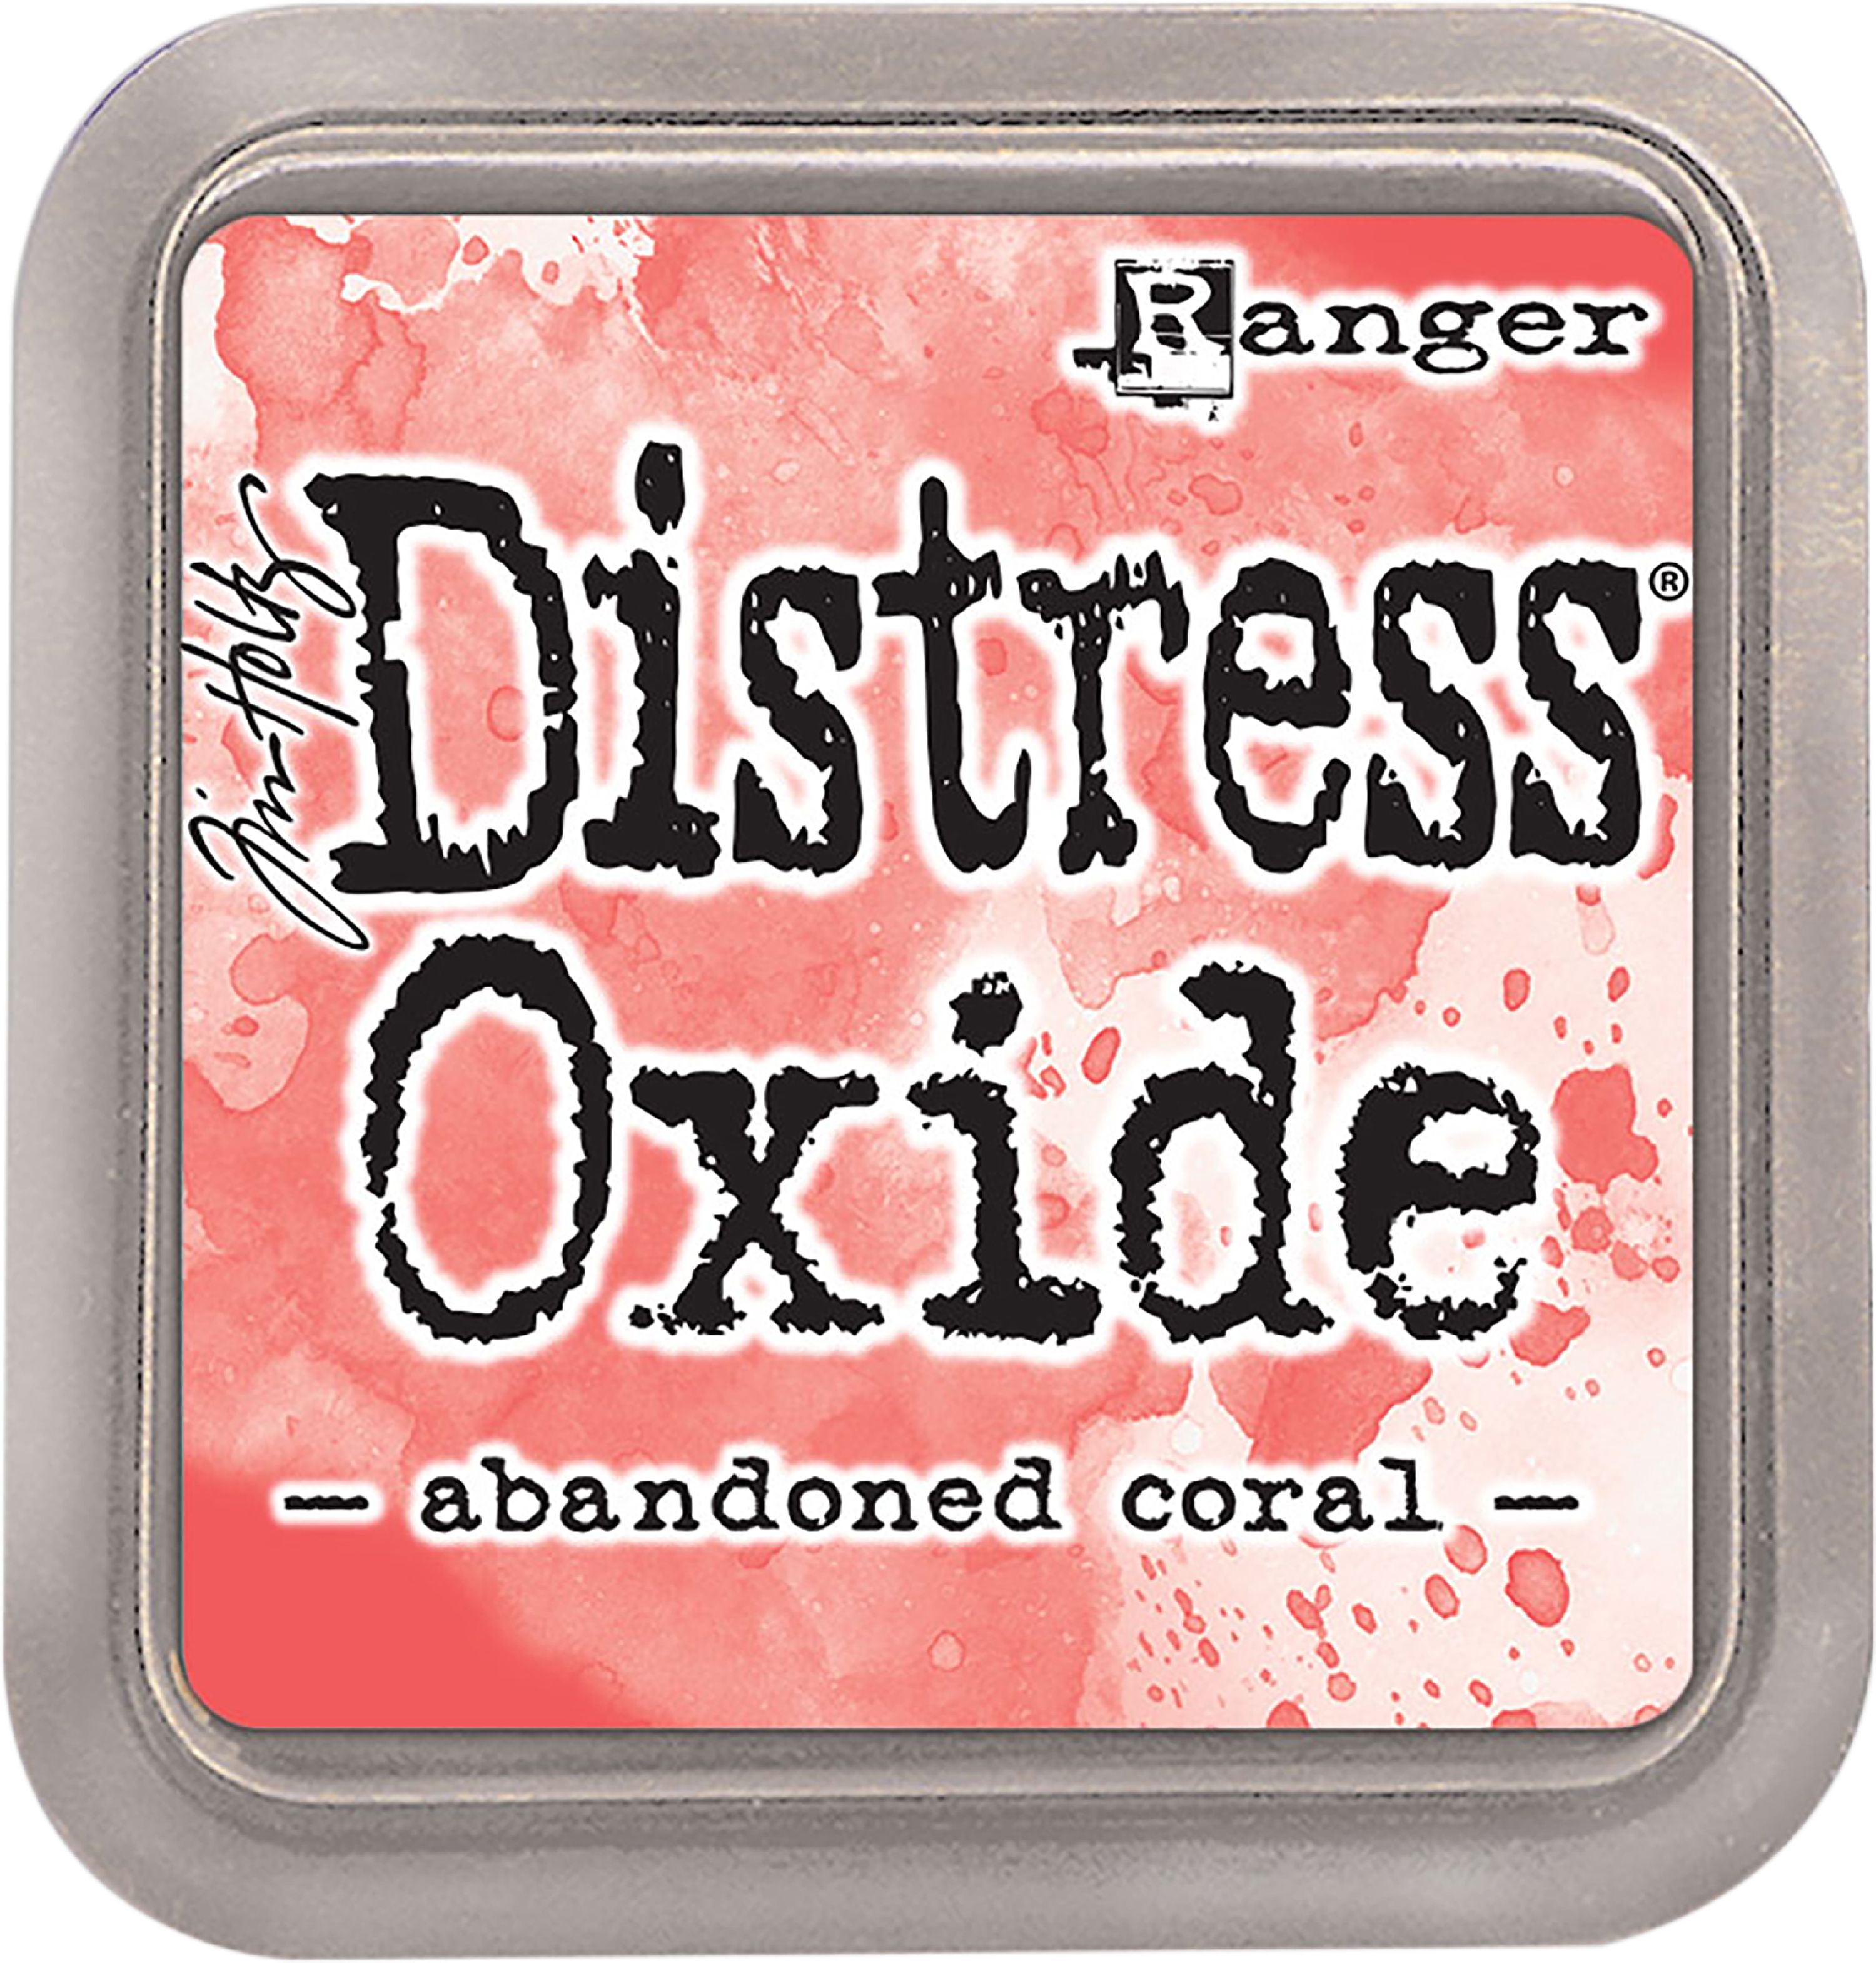 Tim Holtz Distress Oxides Ink Pad-Twisted Citron - Walmart.com